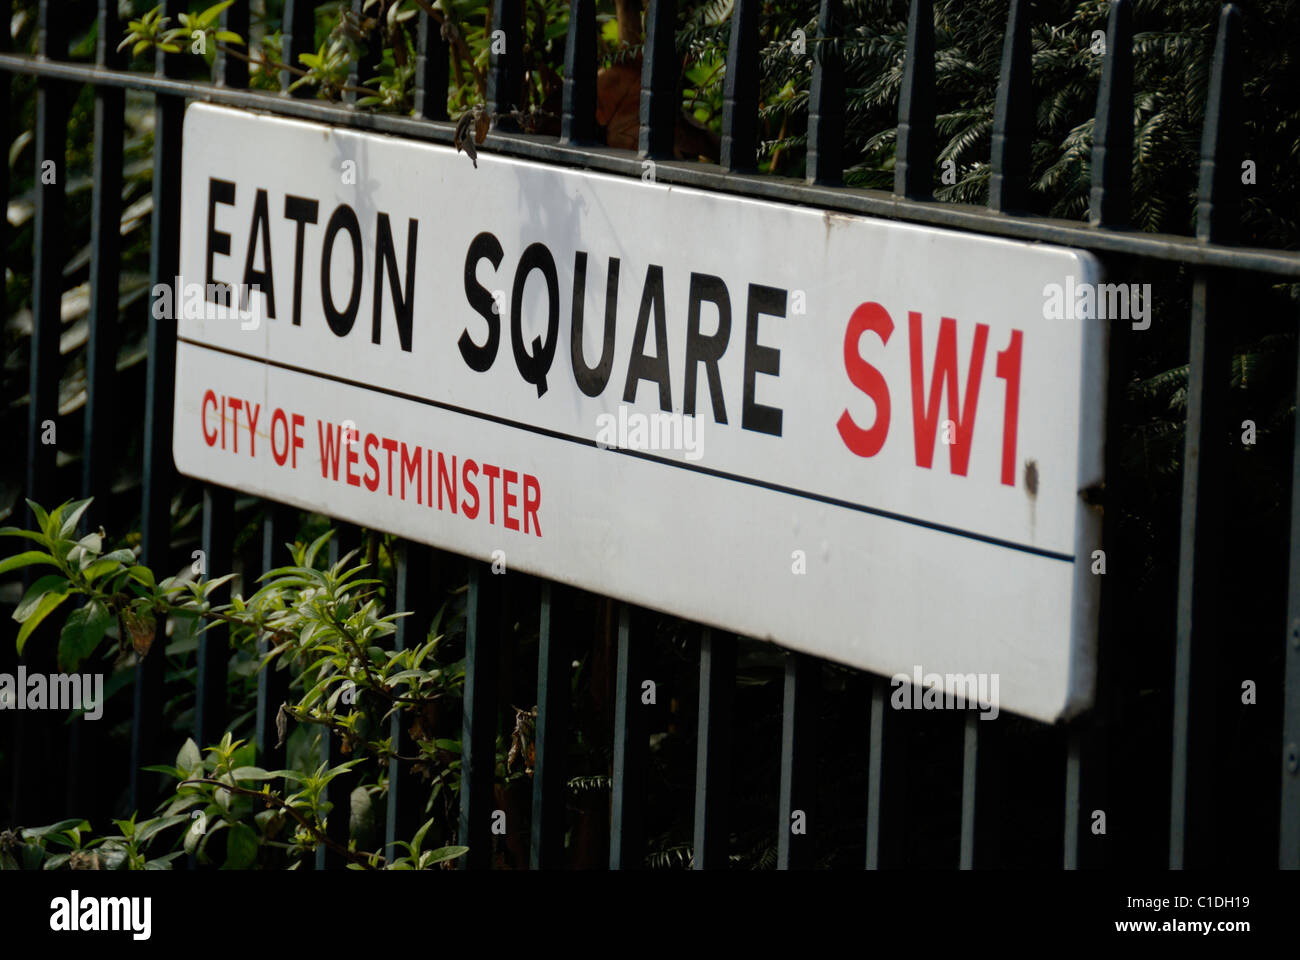 Eaton Square SW1 street sign, Belgravia, London, England Stock Photo